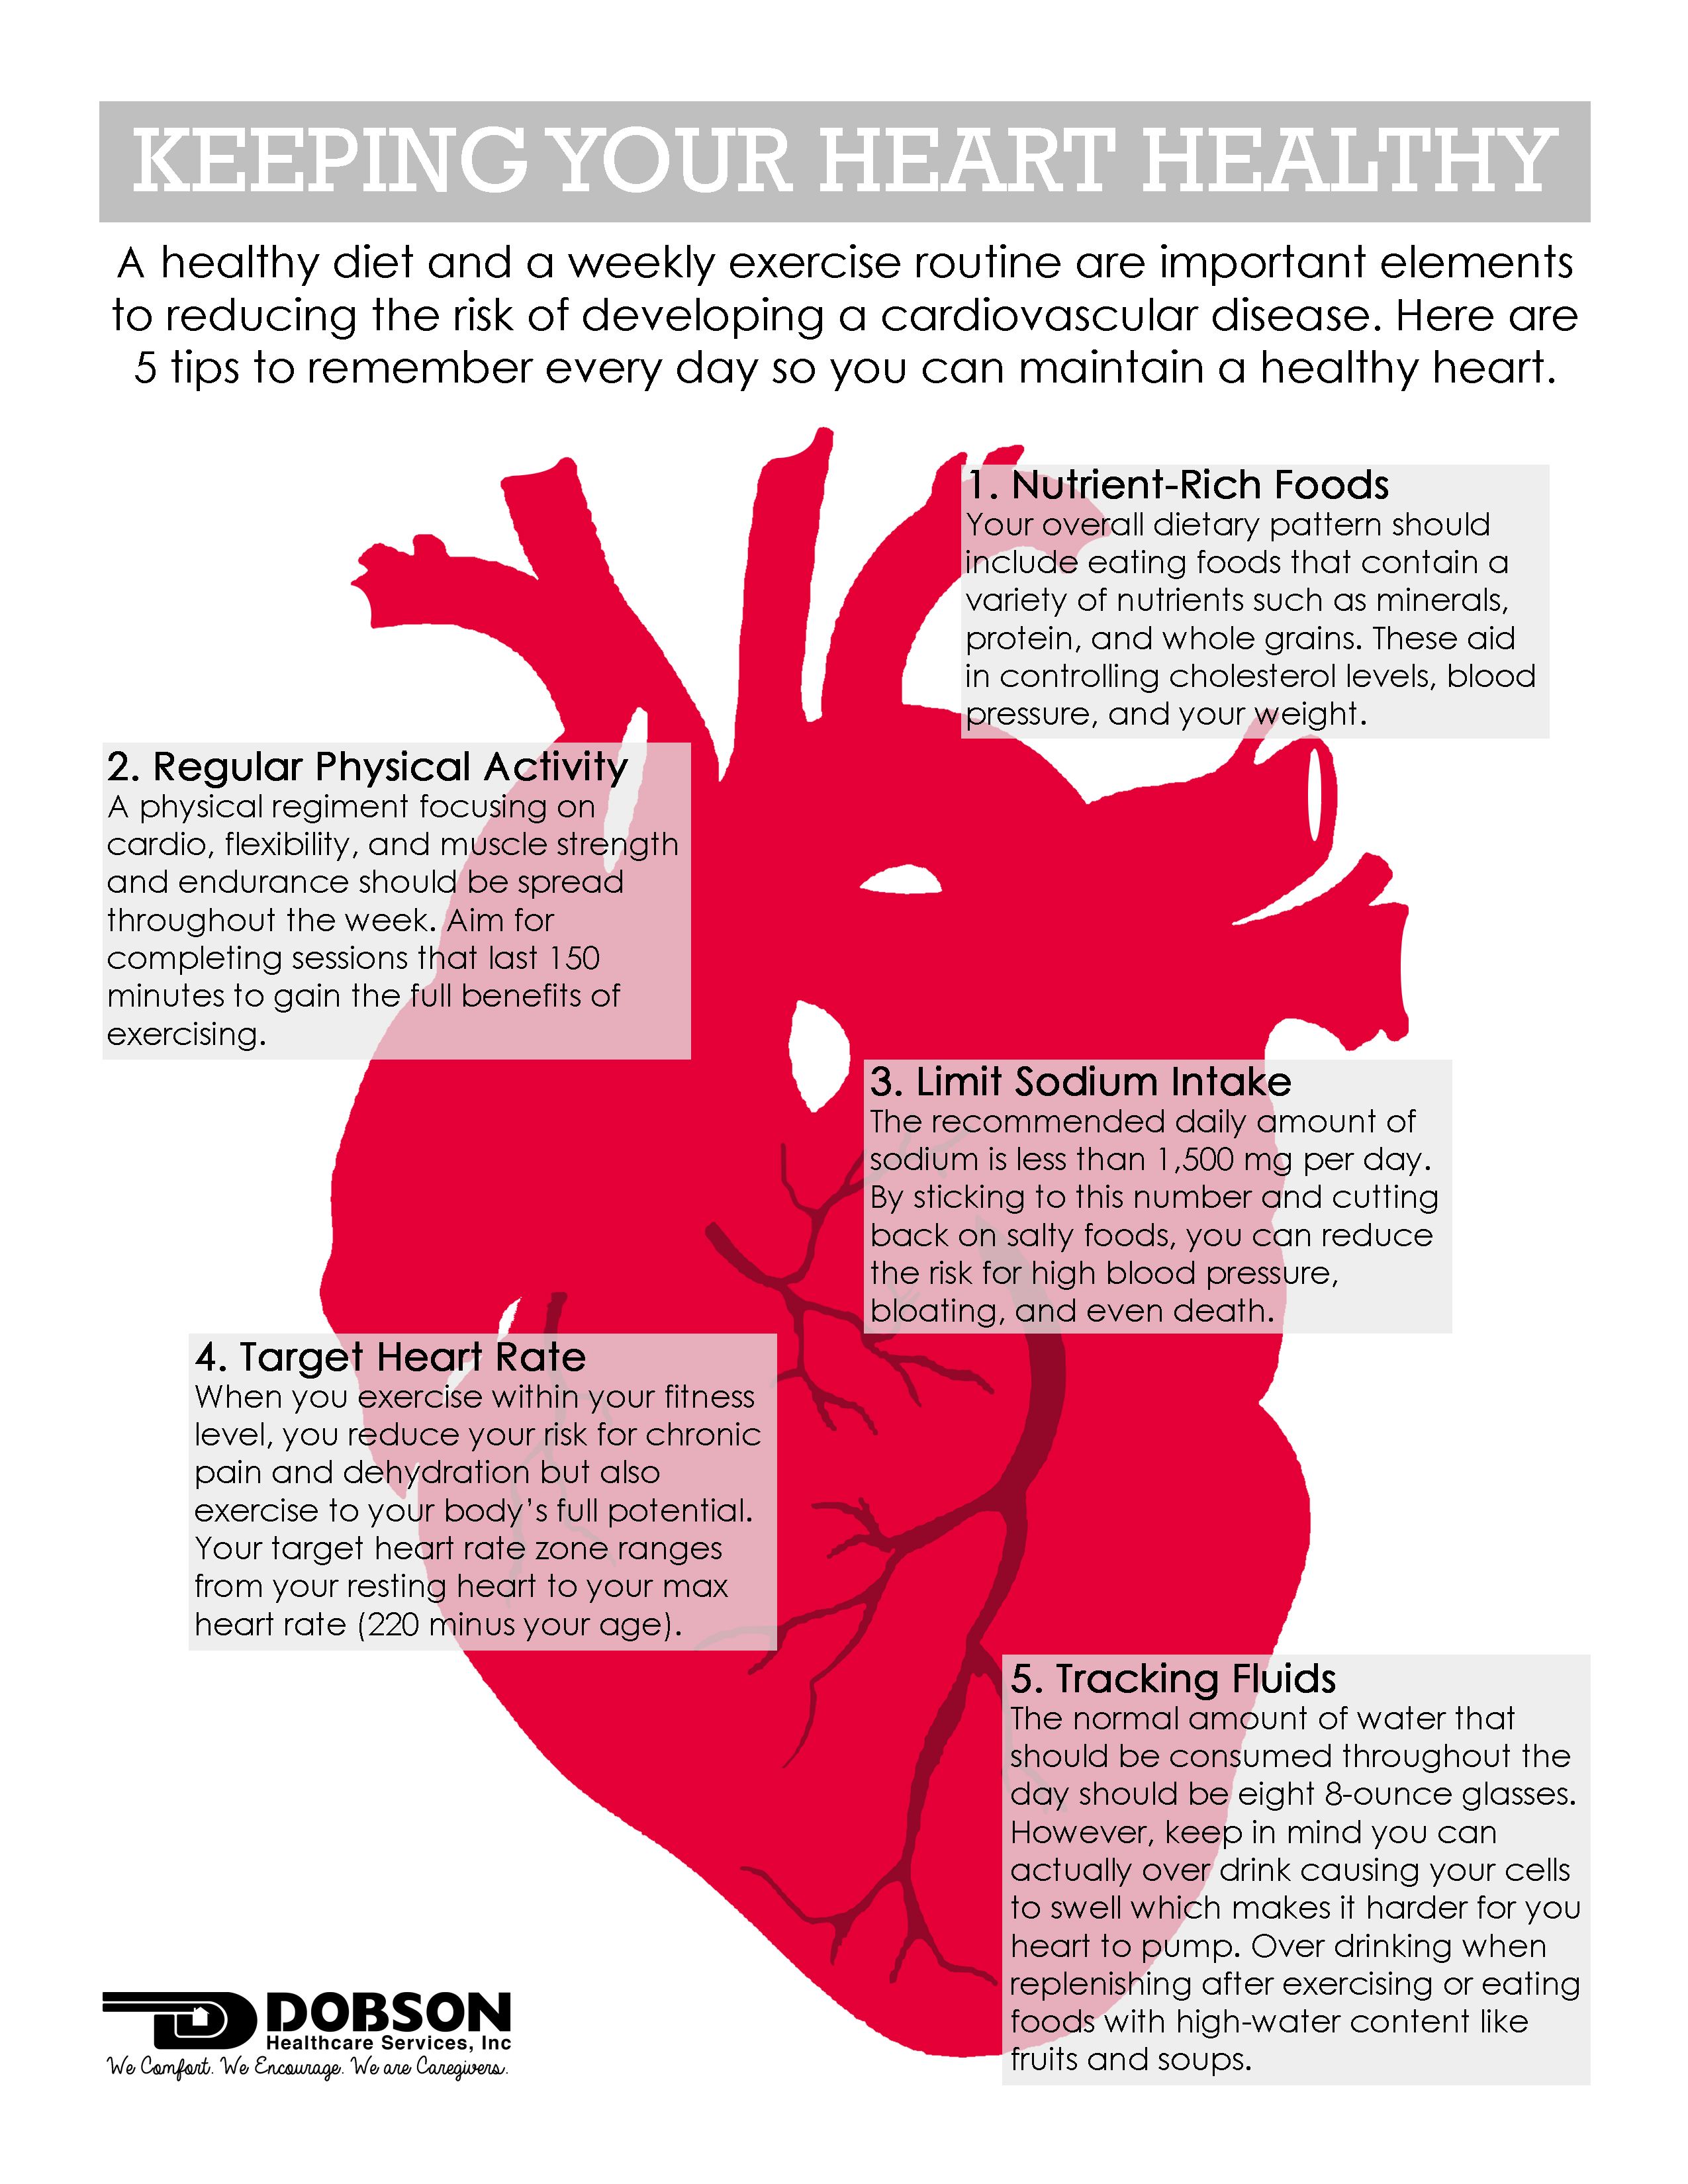 American Heart Association Resting Heart Rate Chart